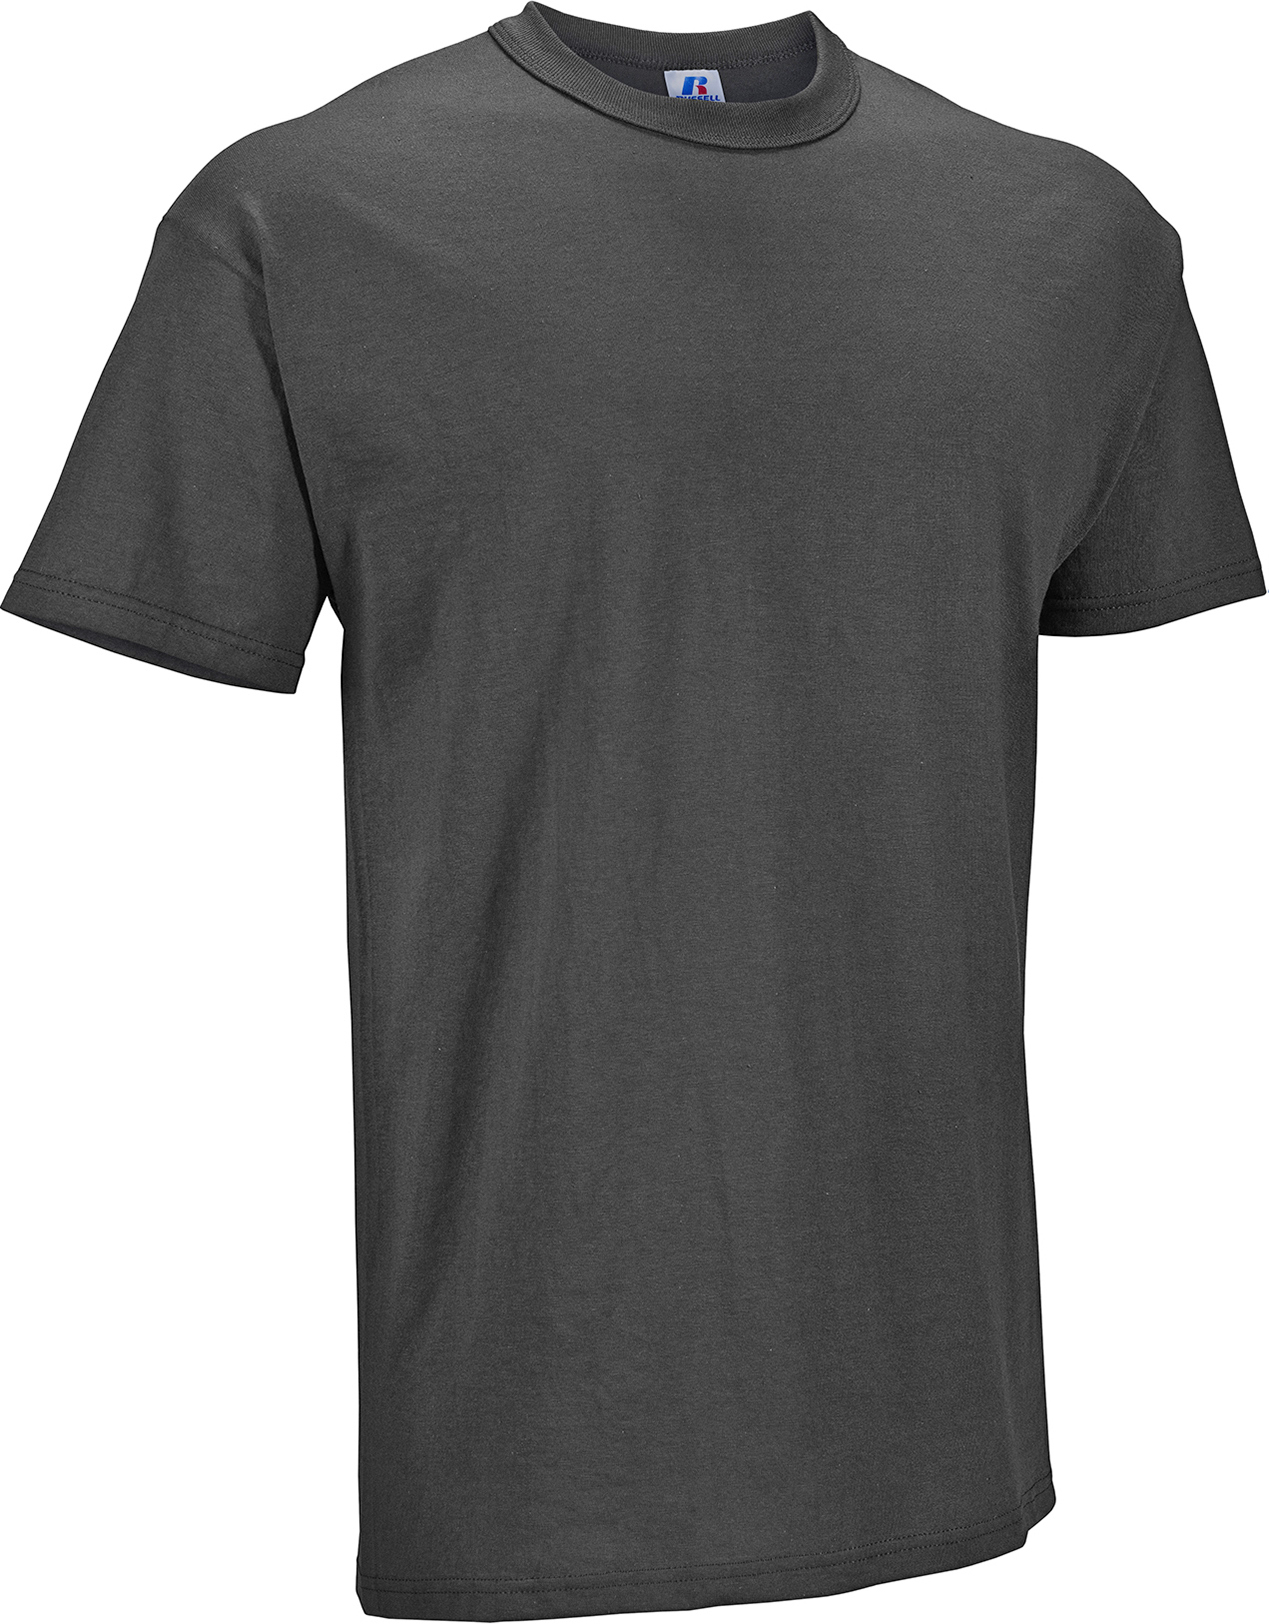 E105517 Russell Athletic Purple Adult Medium AM Nublend Tees Shirt - CO